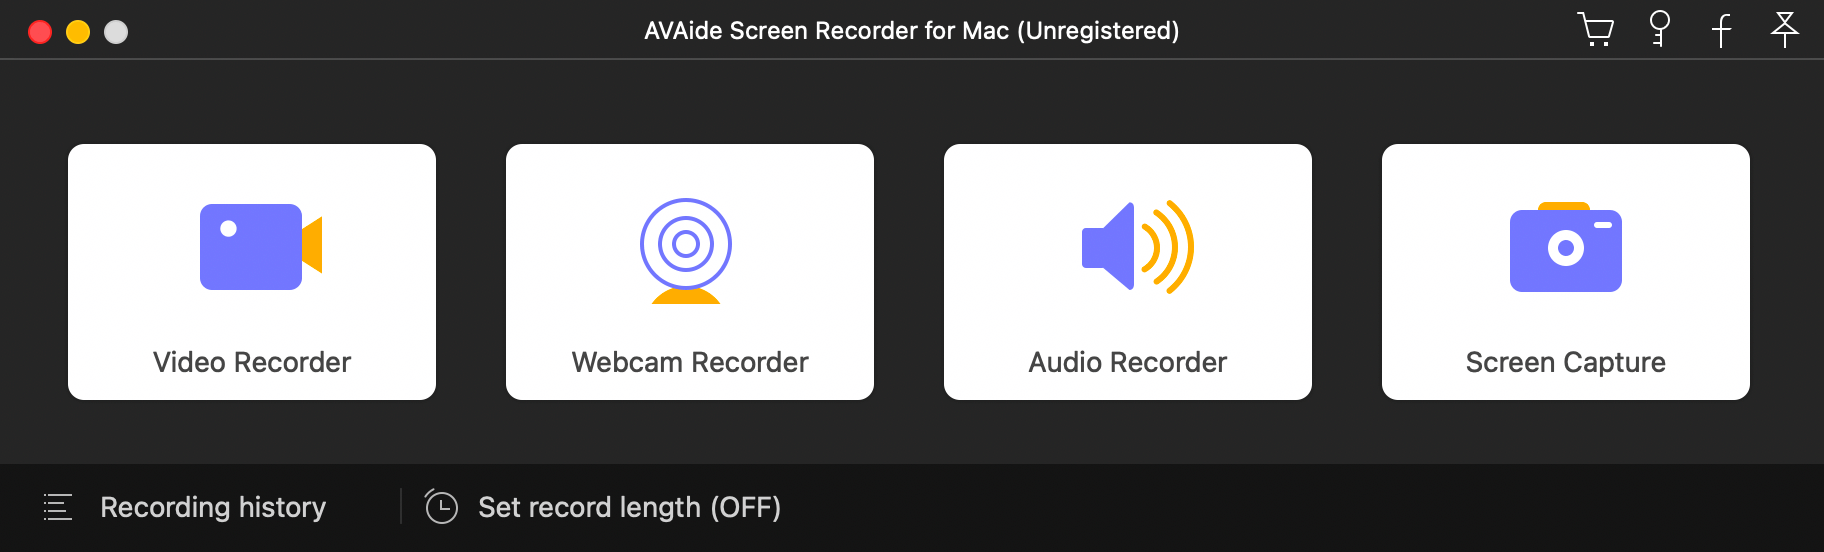 AVAide Screen Recorder for Mac 1.0 : Main Window